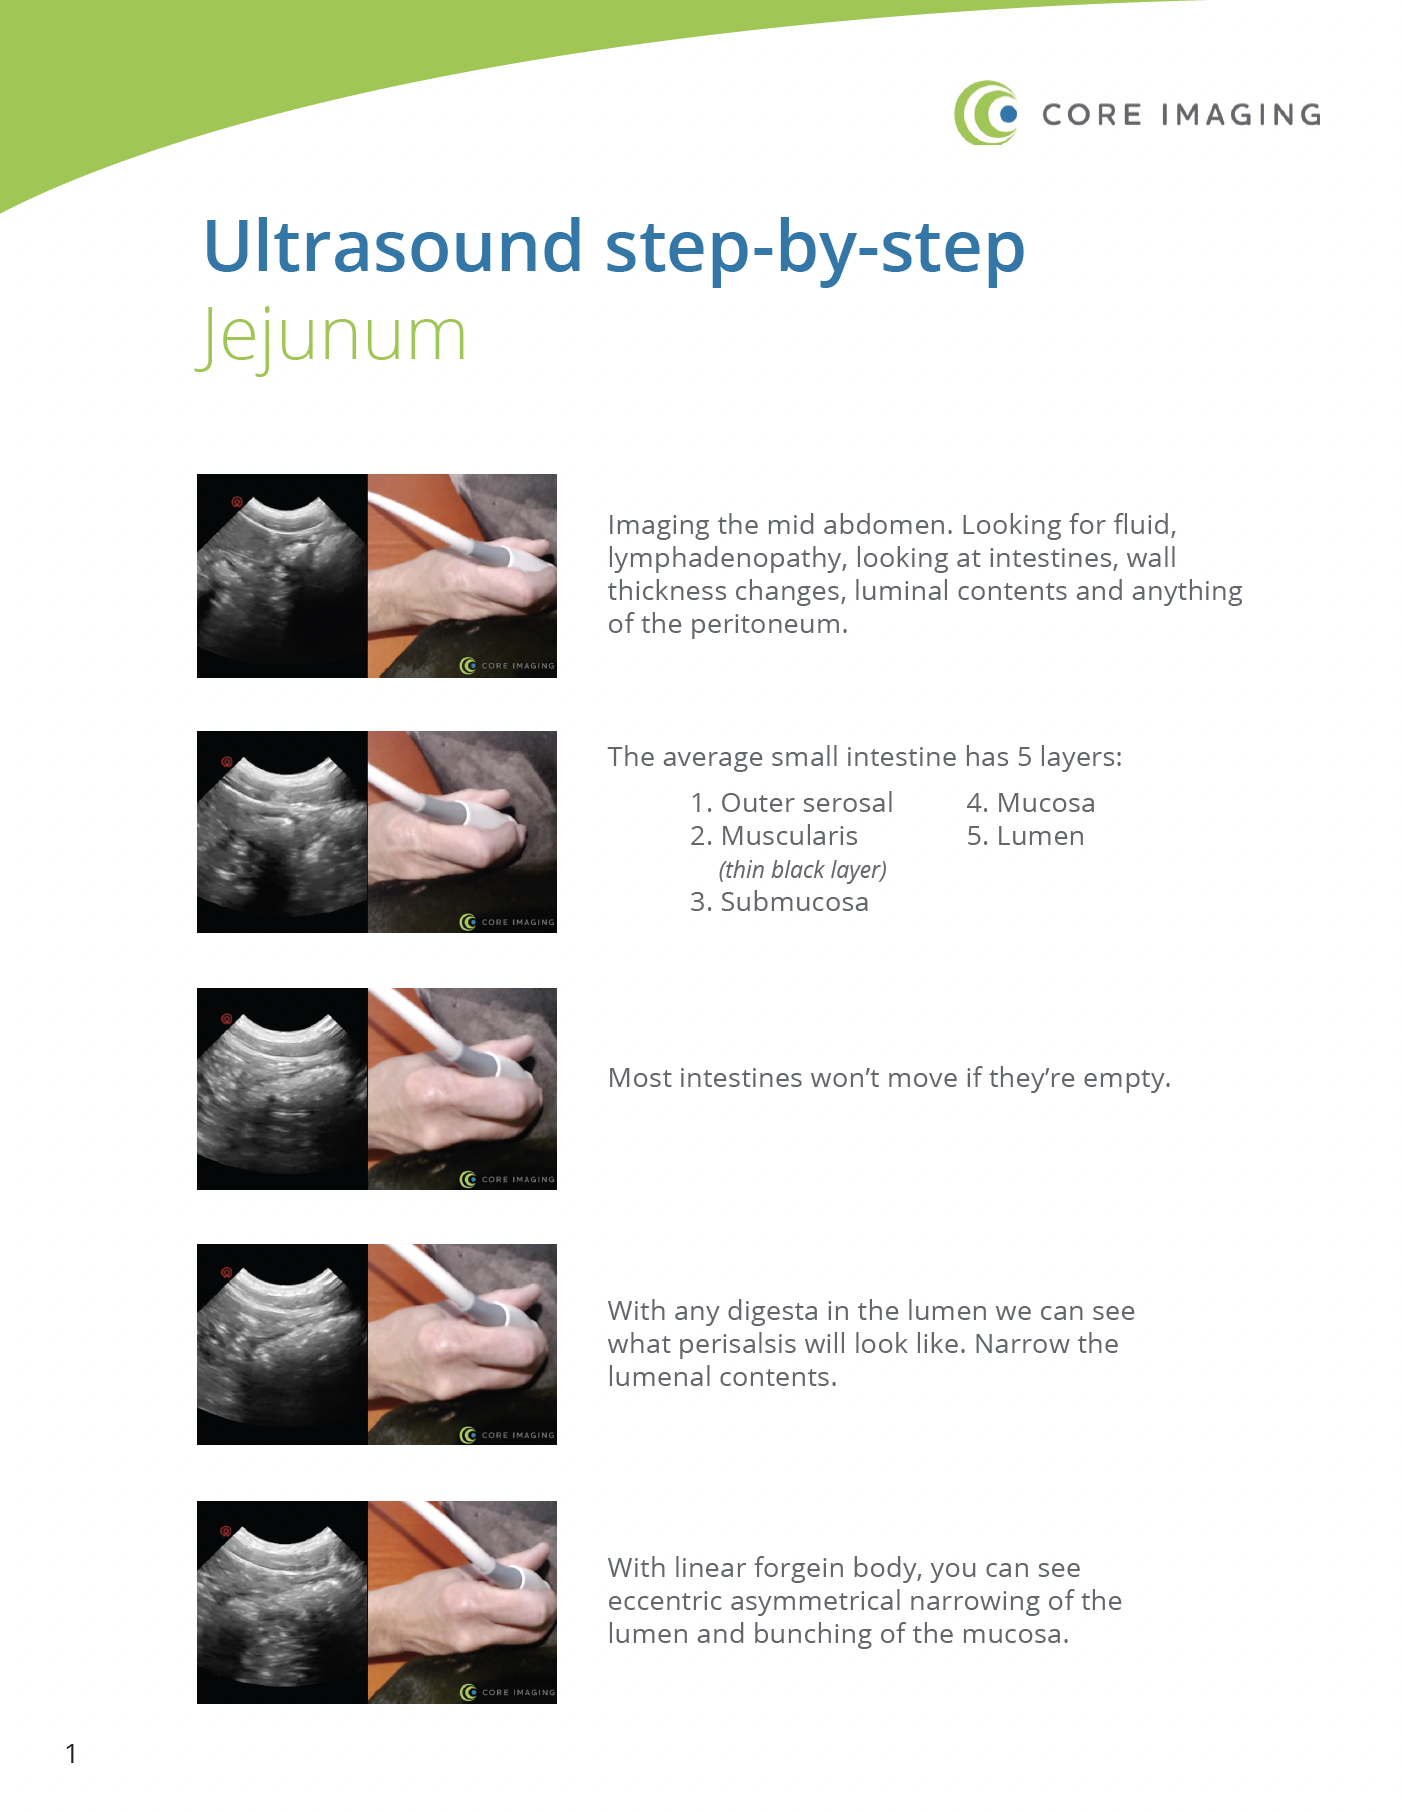 Step-by-Step Ultrasound Guide: Jejunum